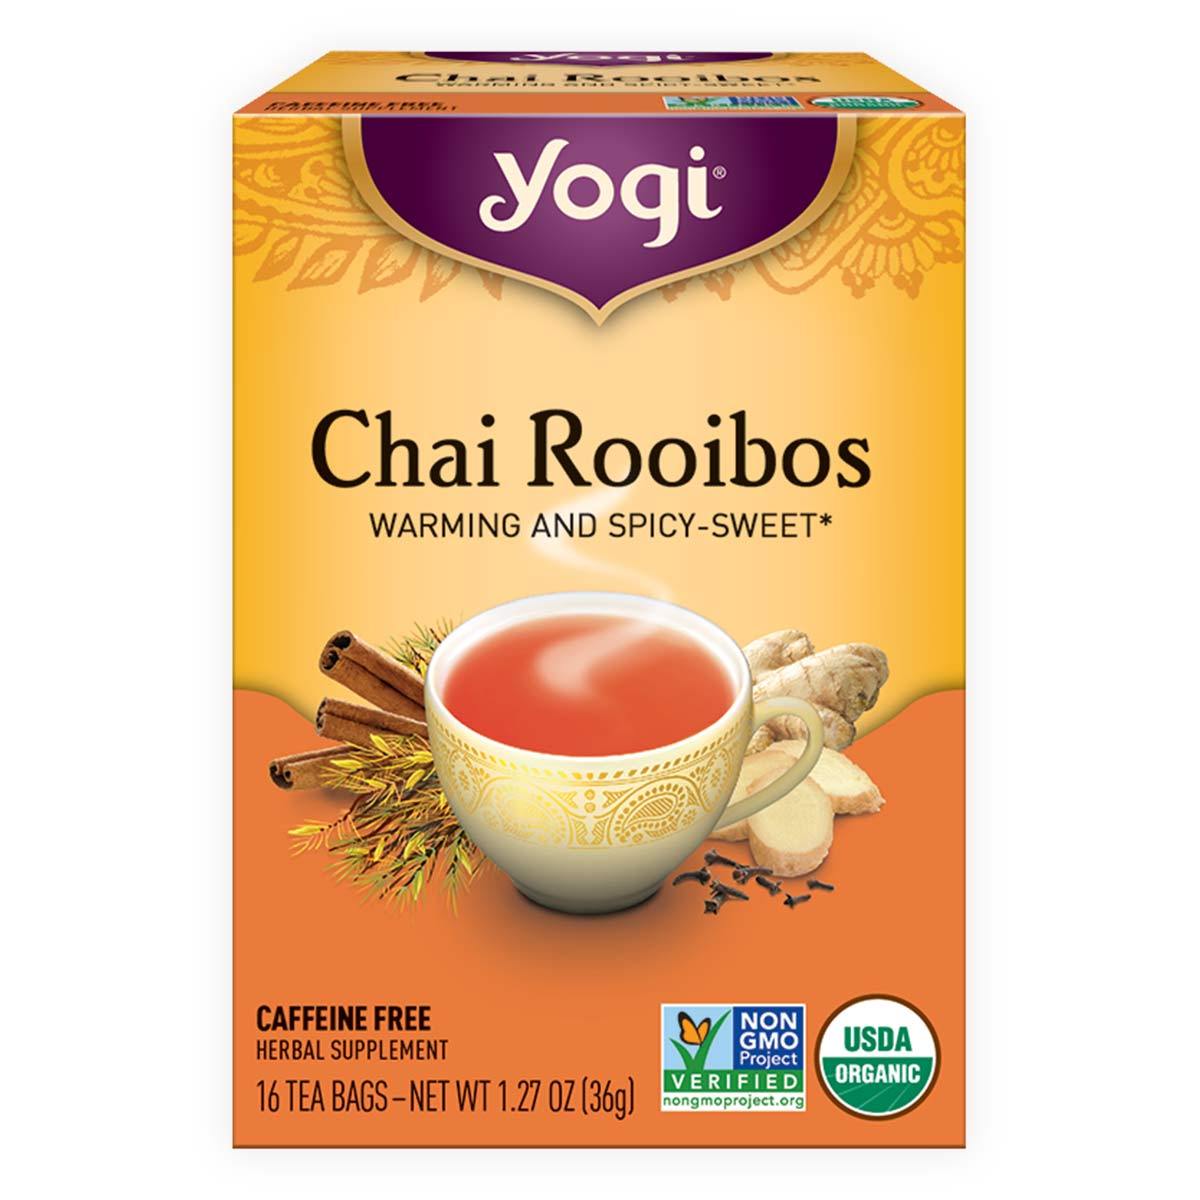 Primary image of Chai Rooibos Tea